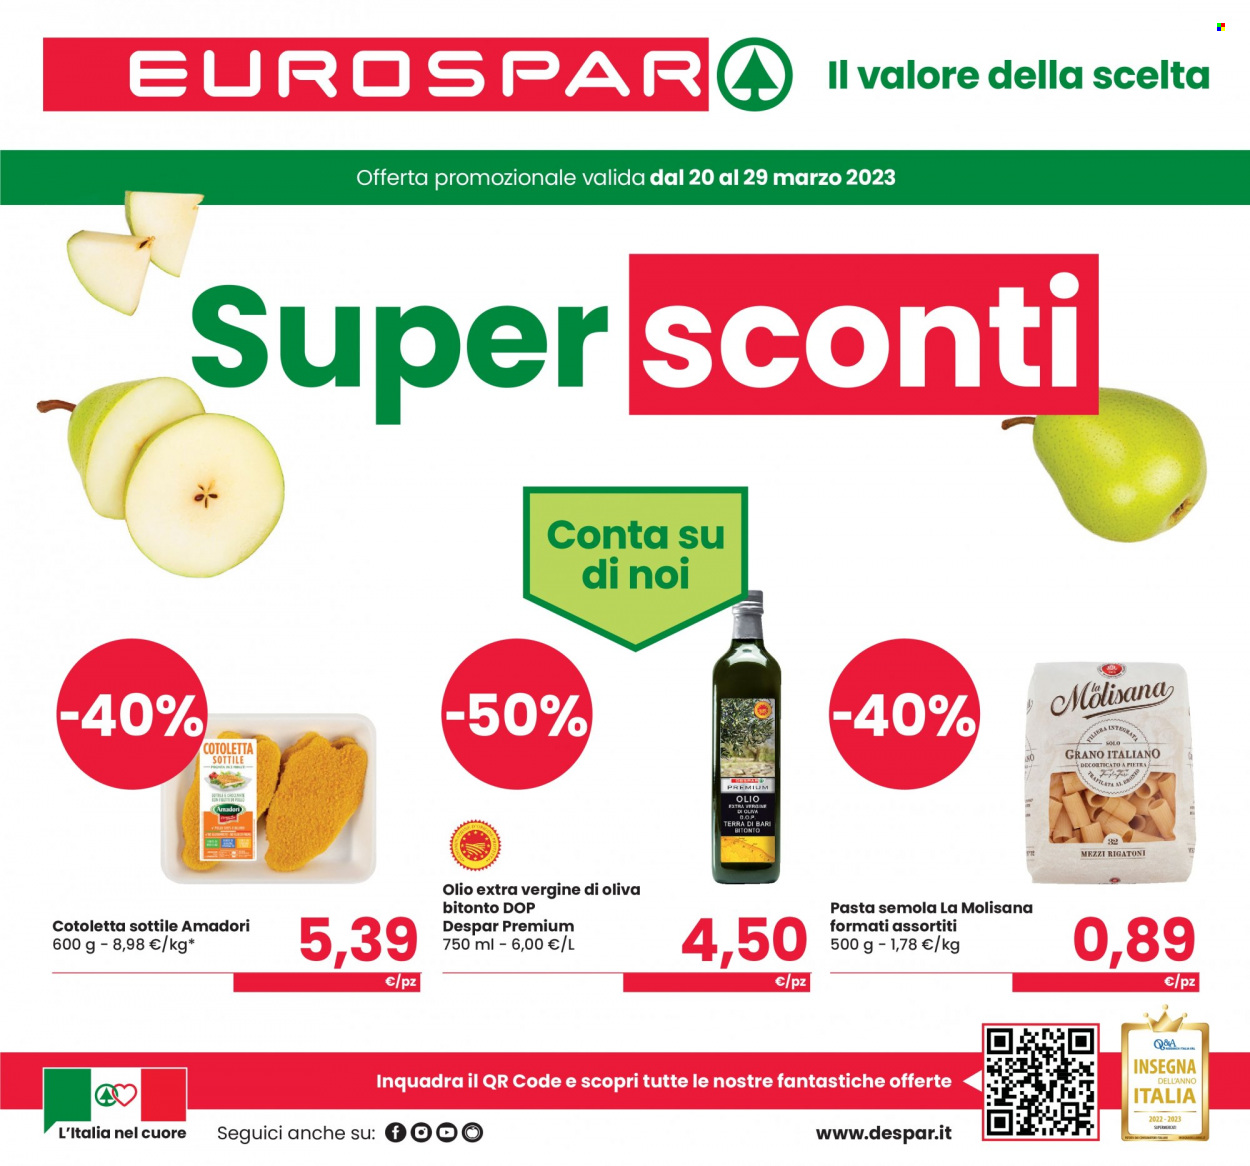 thumbnail - Volantino Eurospar - 20/3/2023 - 29/3/2023 - Prodotti in offerta - pollo, Amadori, pasta, olio, olio extra vergine di oliva. Pagina 1.